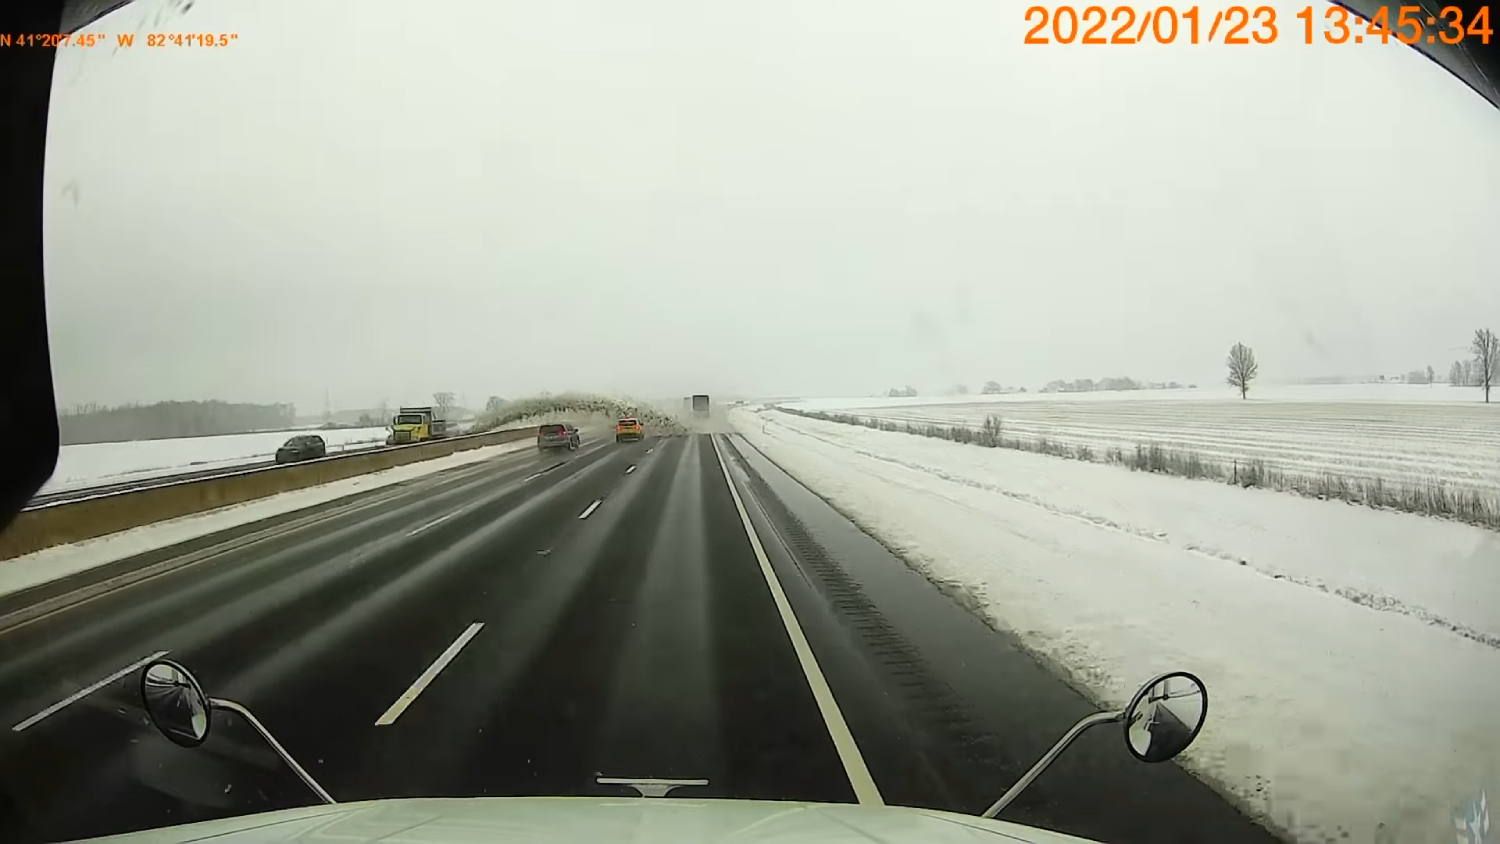 A rogue snowplow dumps snow onto a highway